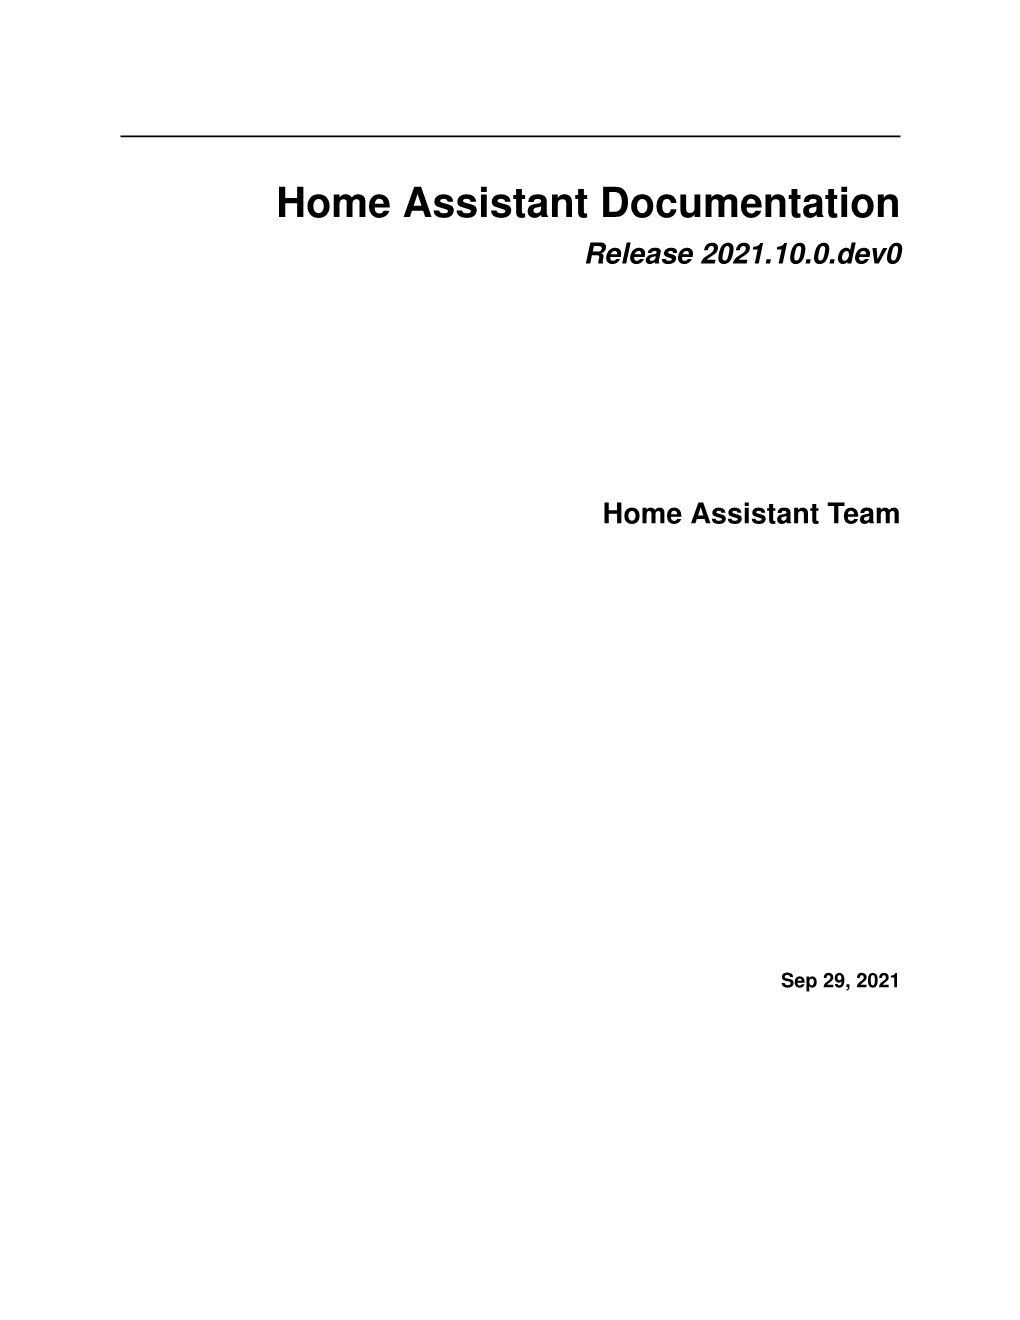 Home Assistant Documentation Release 2021.10.0.Dev0